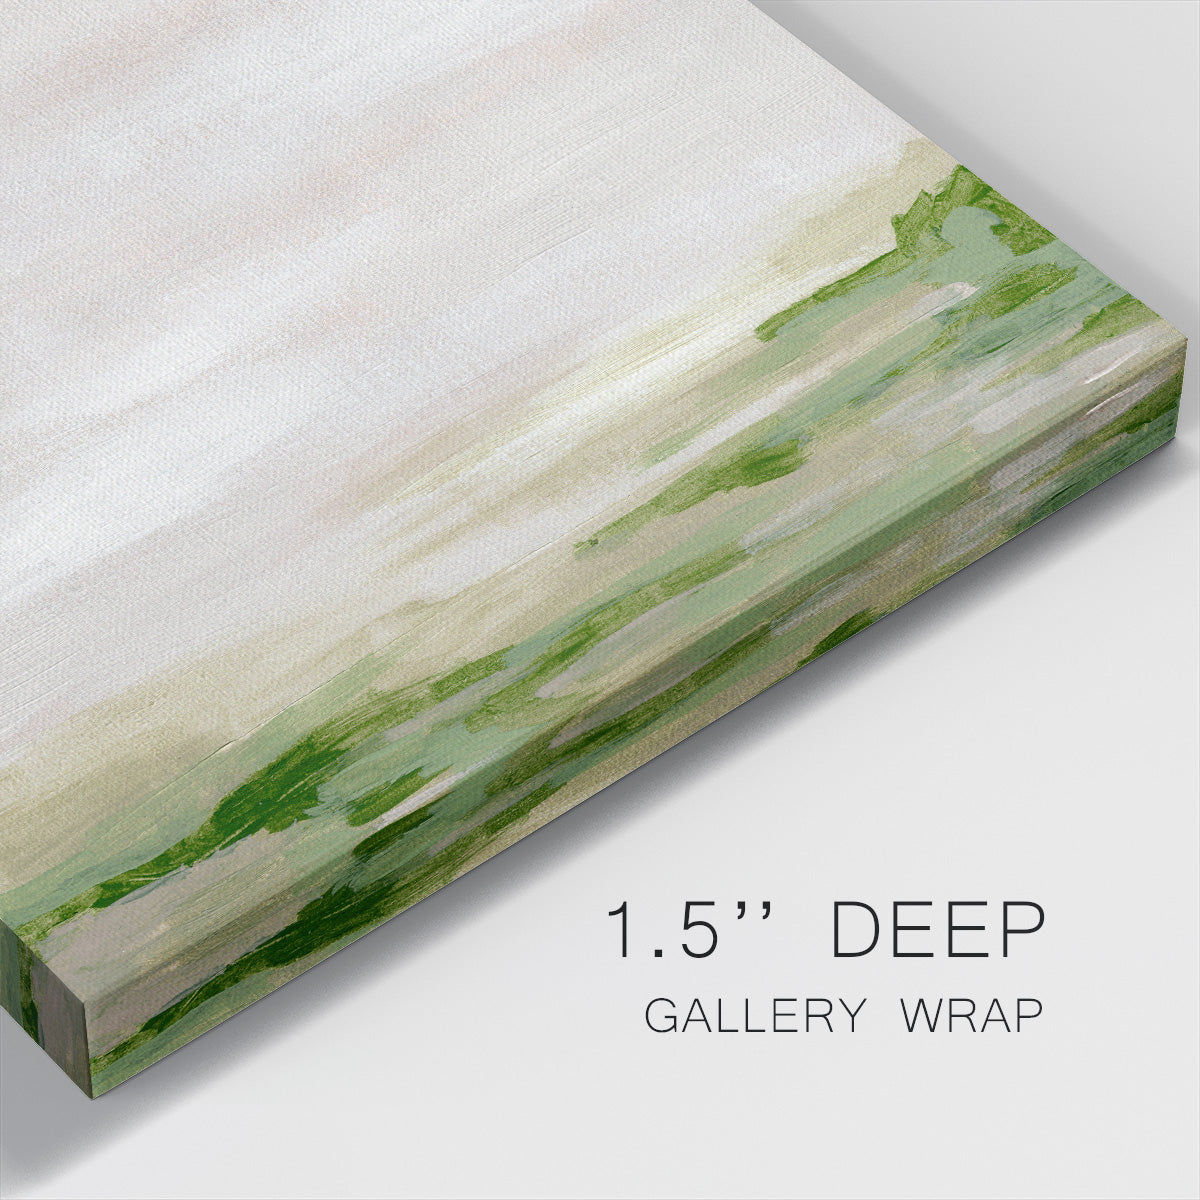 Marsh Horizon II-Premium Gallery Wrapped Canvas - Ready to Hang